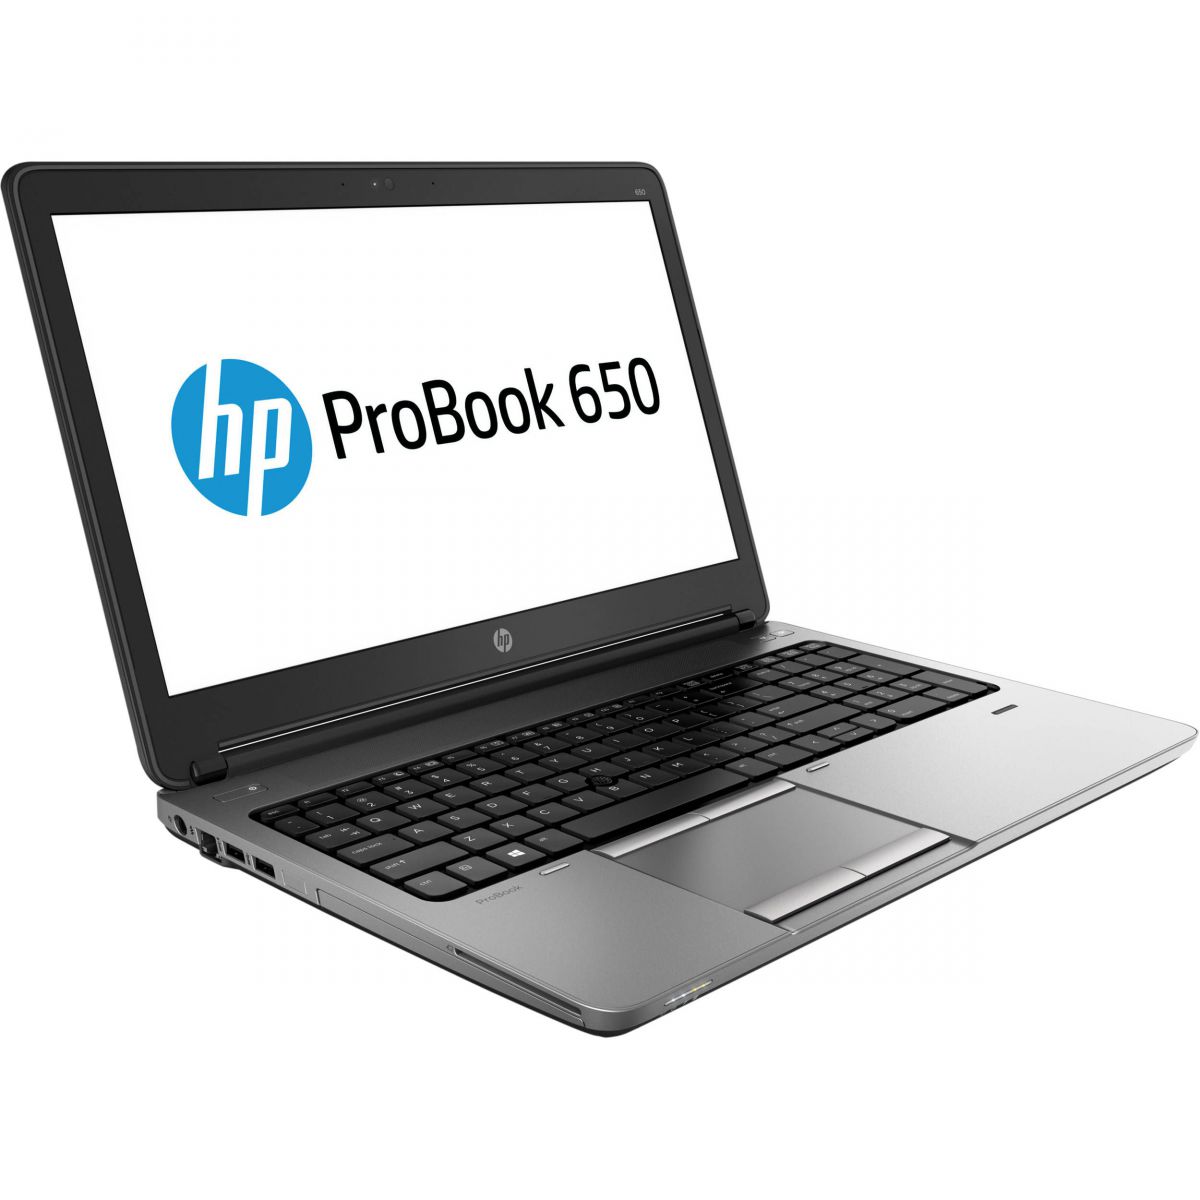 Hp probook 650 g1(Intel Core i5-4200M/2.6 GHz/8GB/120GB SSD/Intel HD Graphics 4600/15,6')